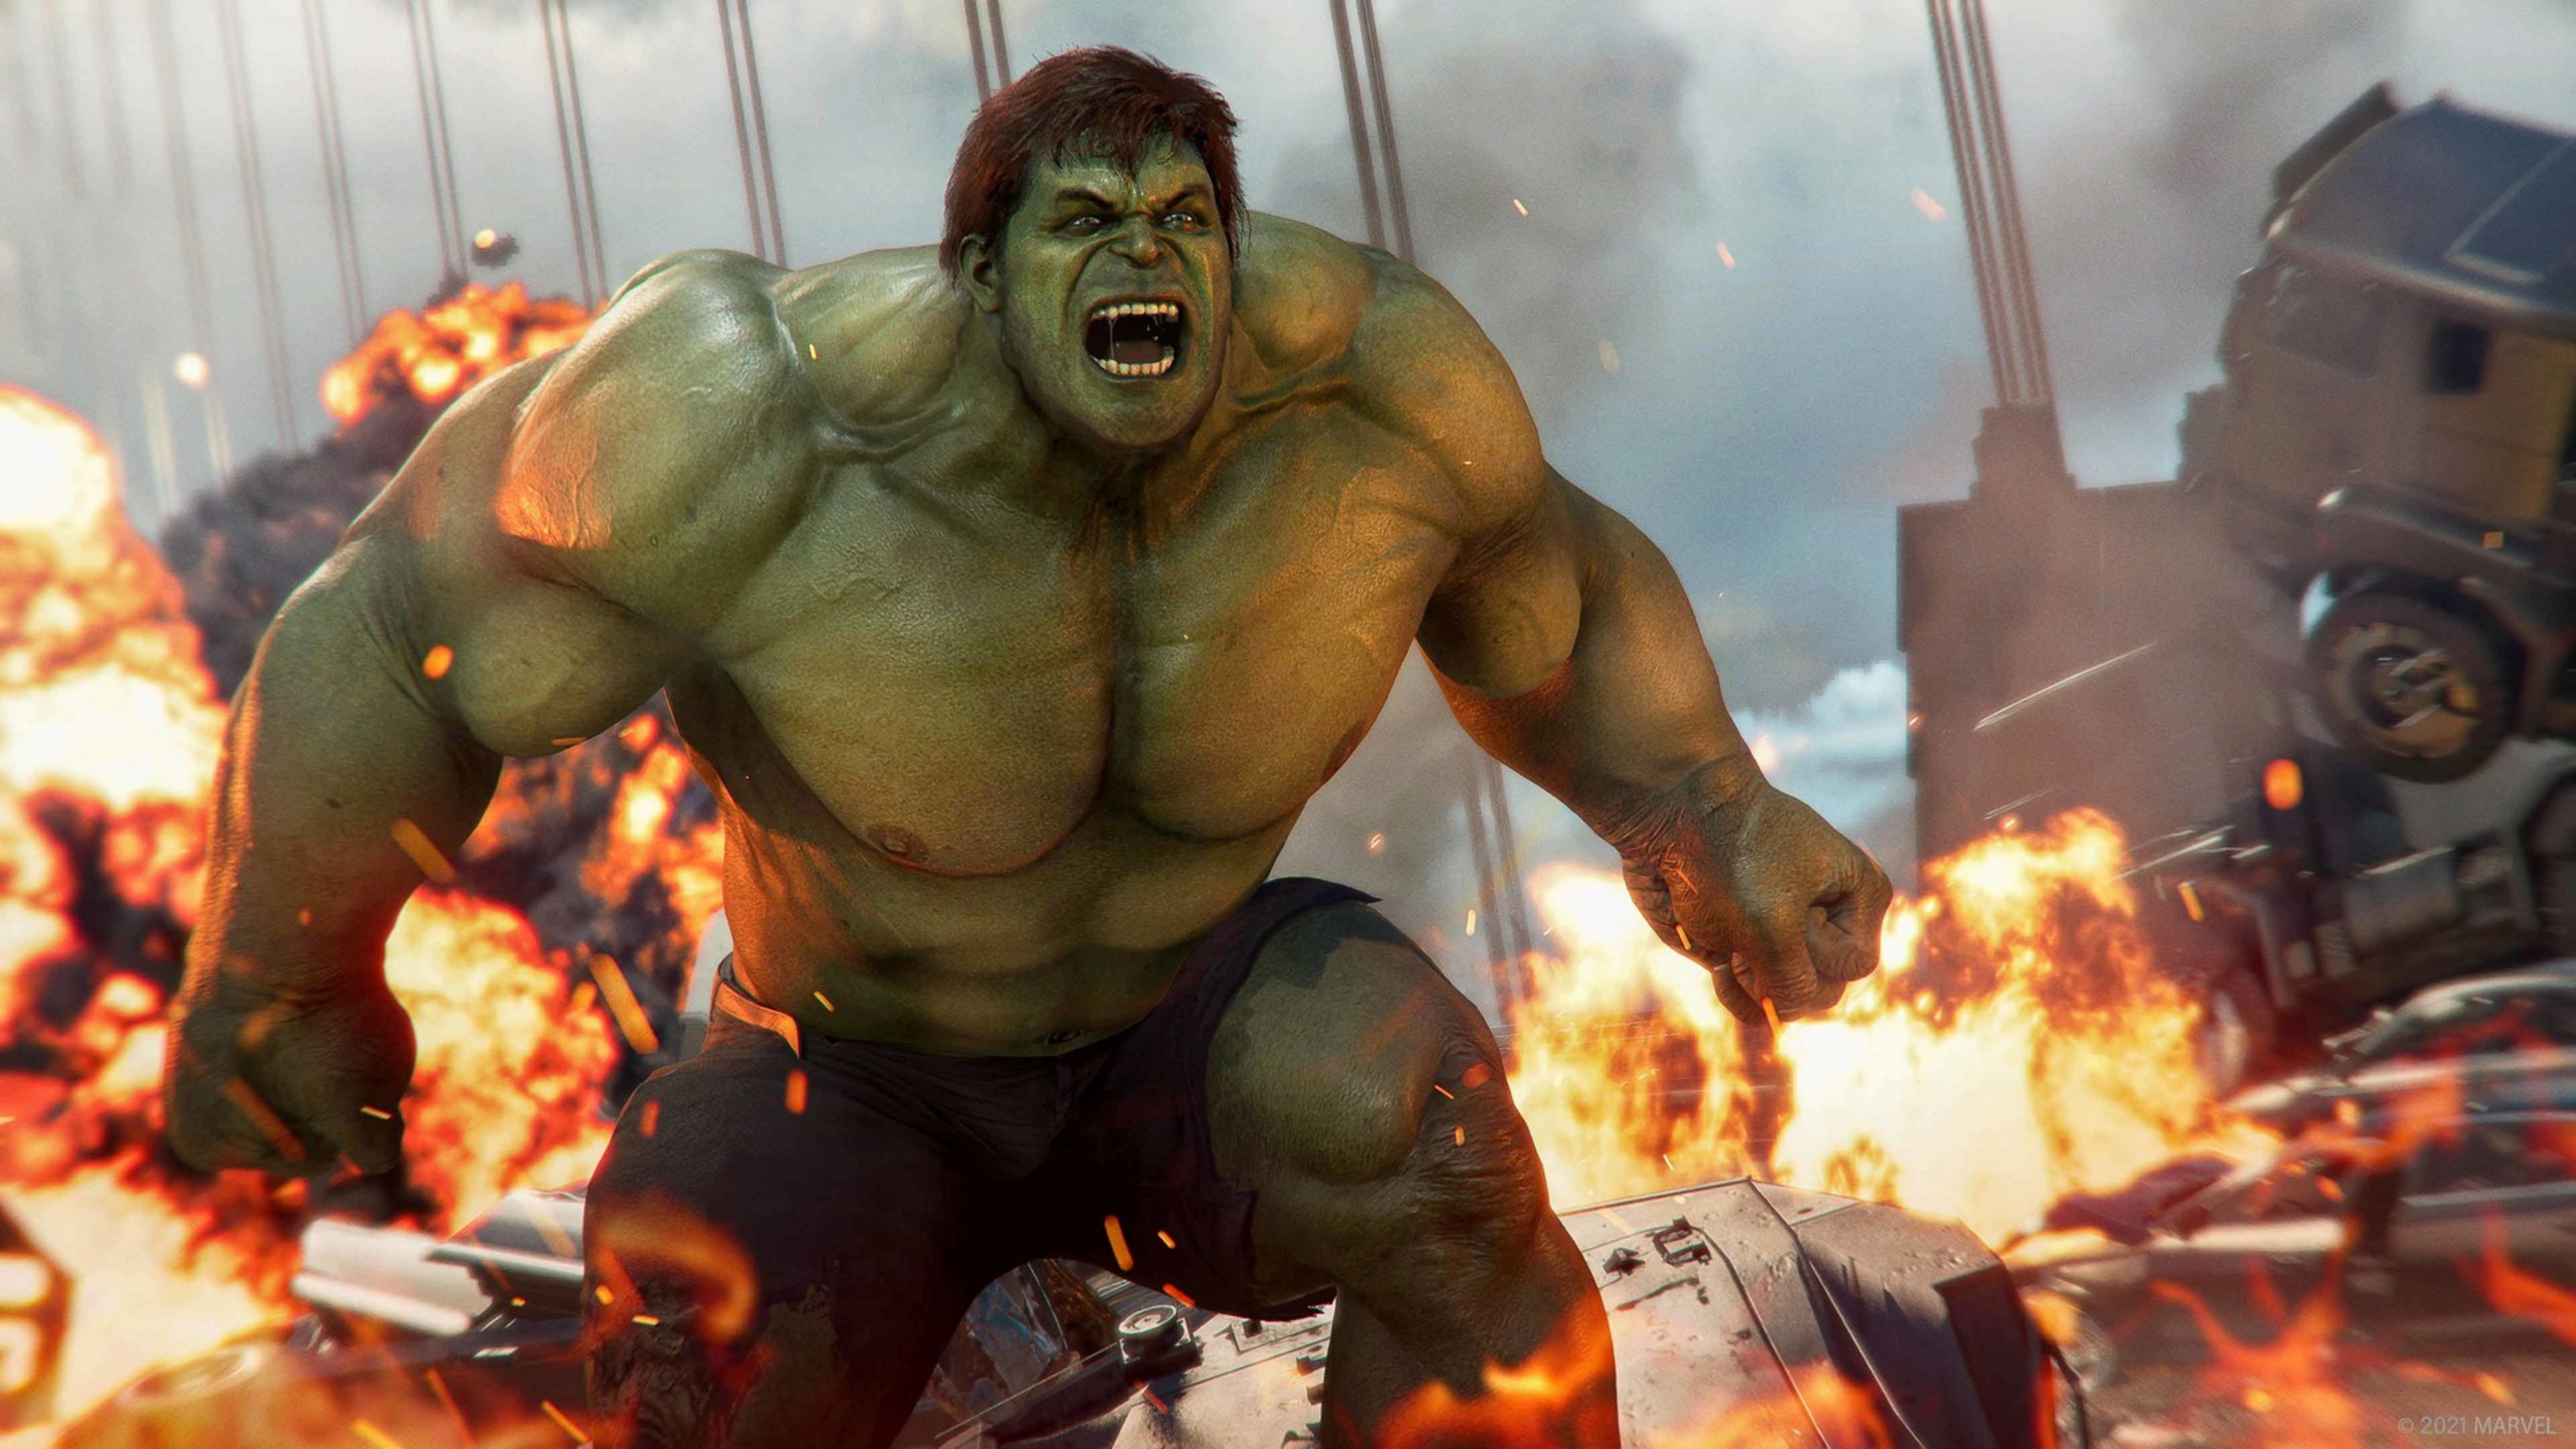  Marvel's Avengers designer removed as spokesperson over offensive tweets 